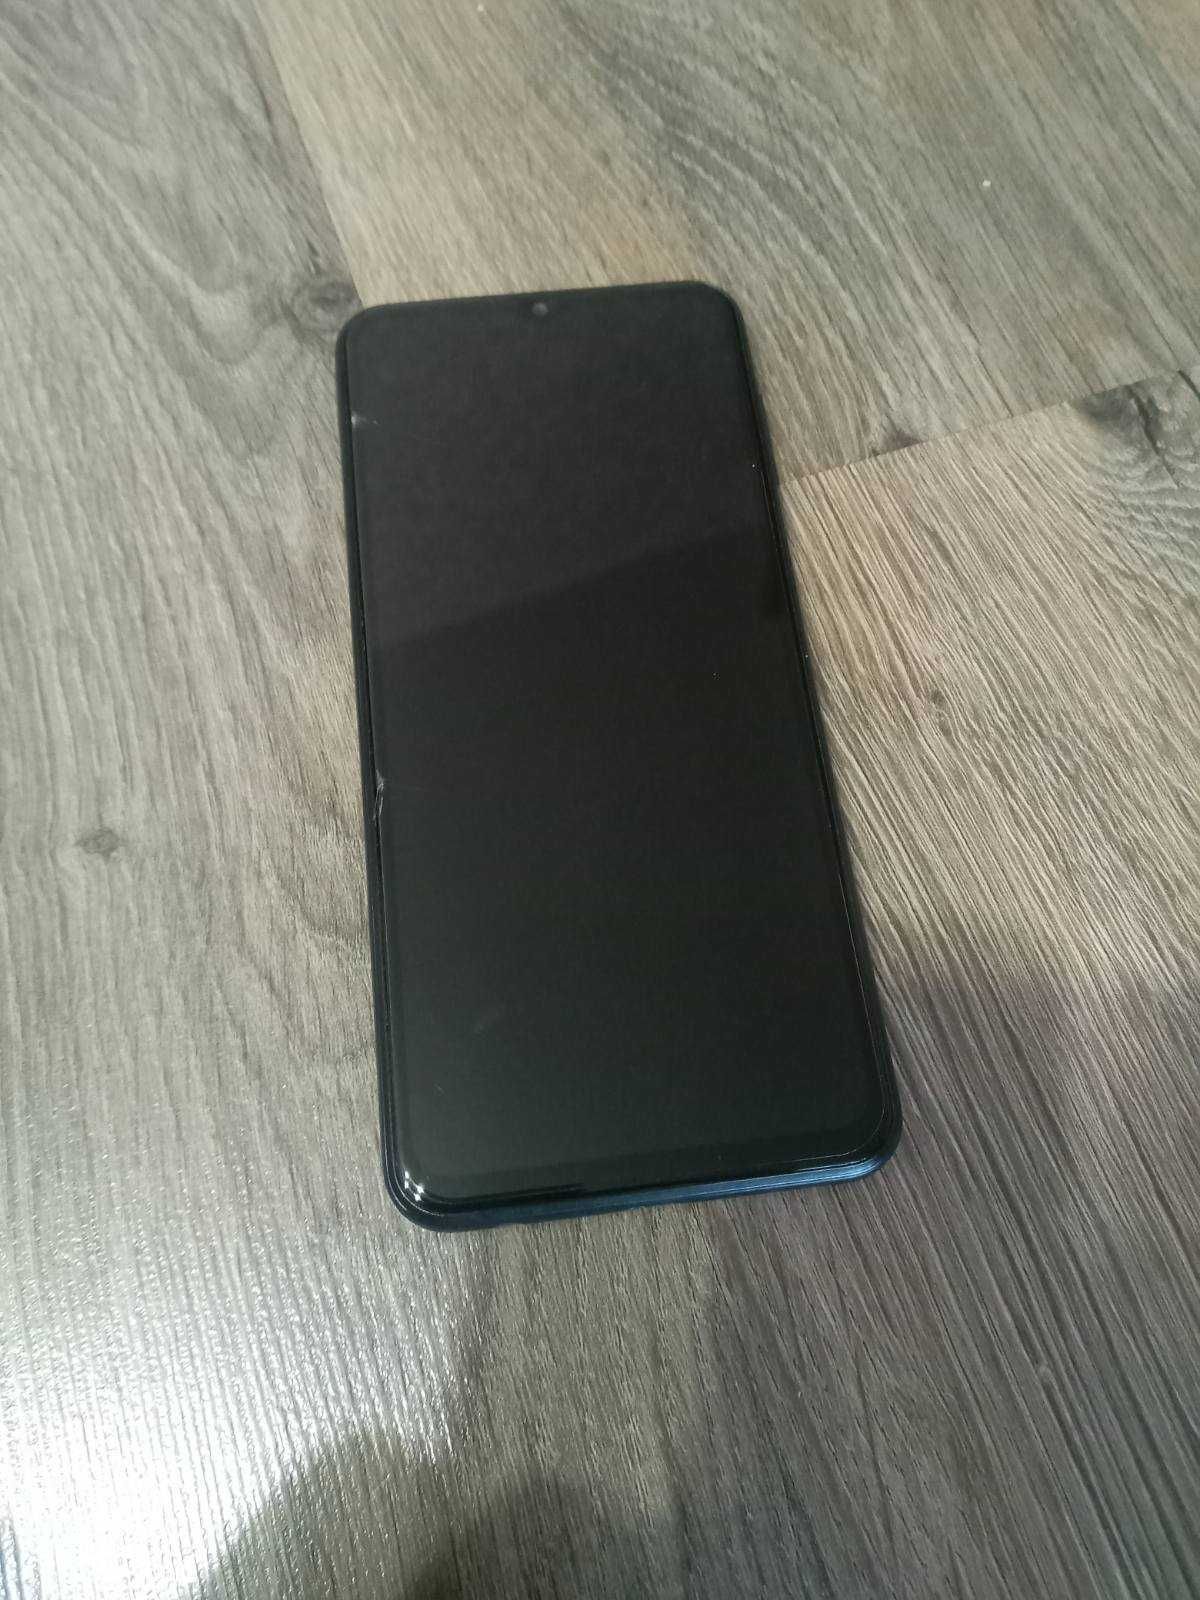 Мобільний телефон Samsung Galaxy M33 5G 6/128GB Blue